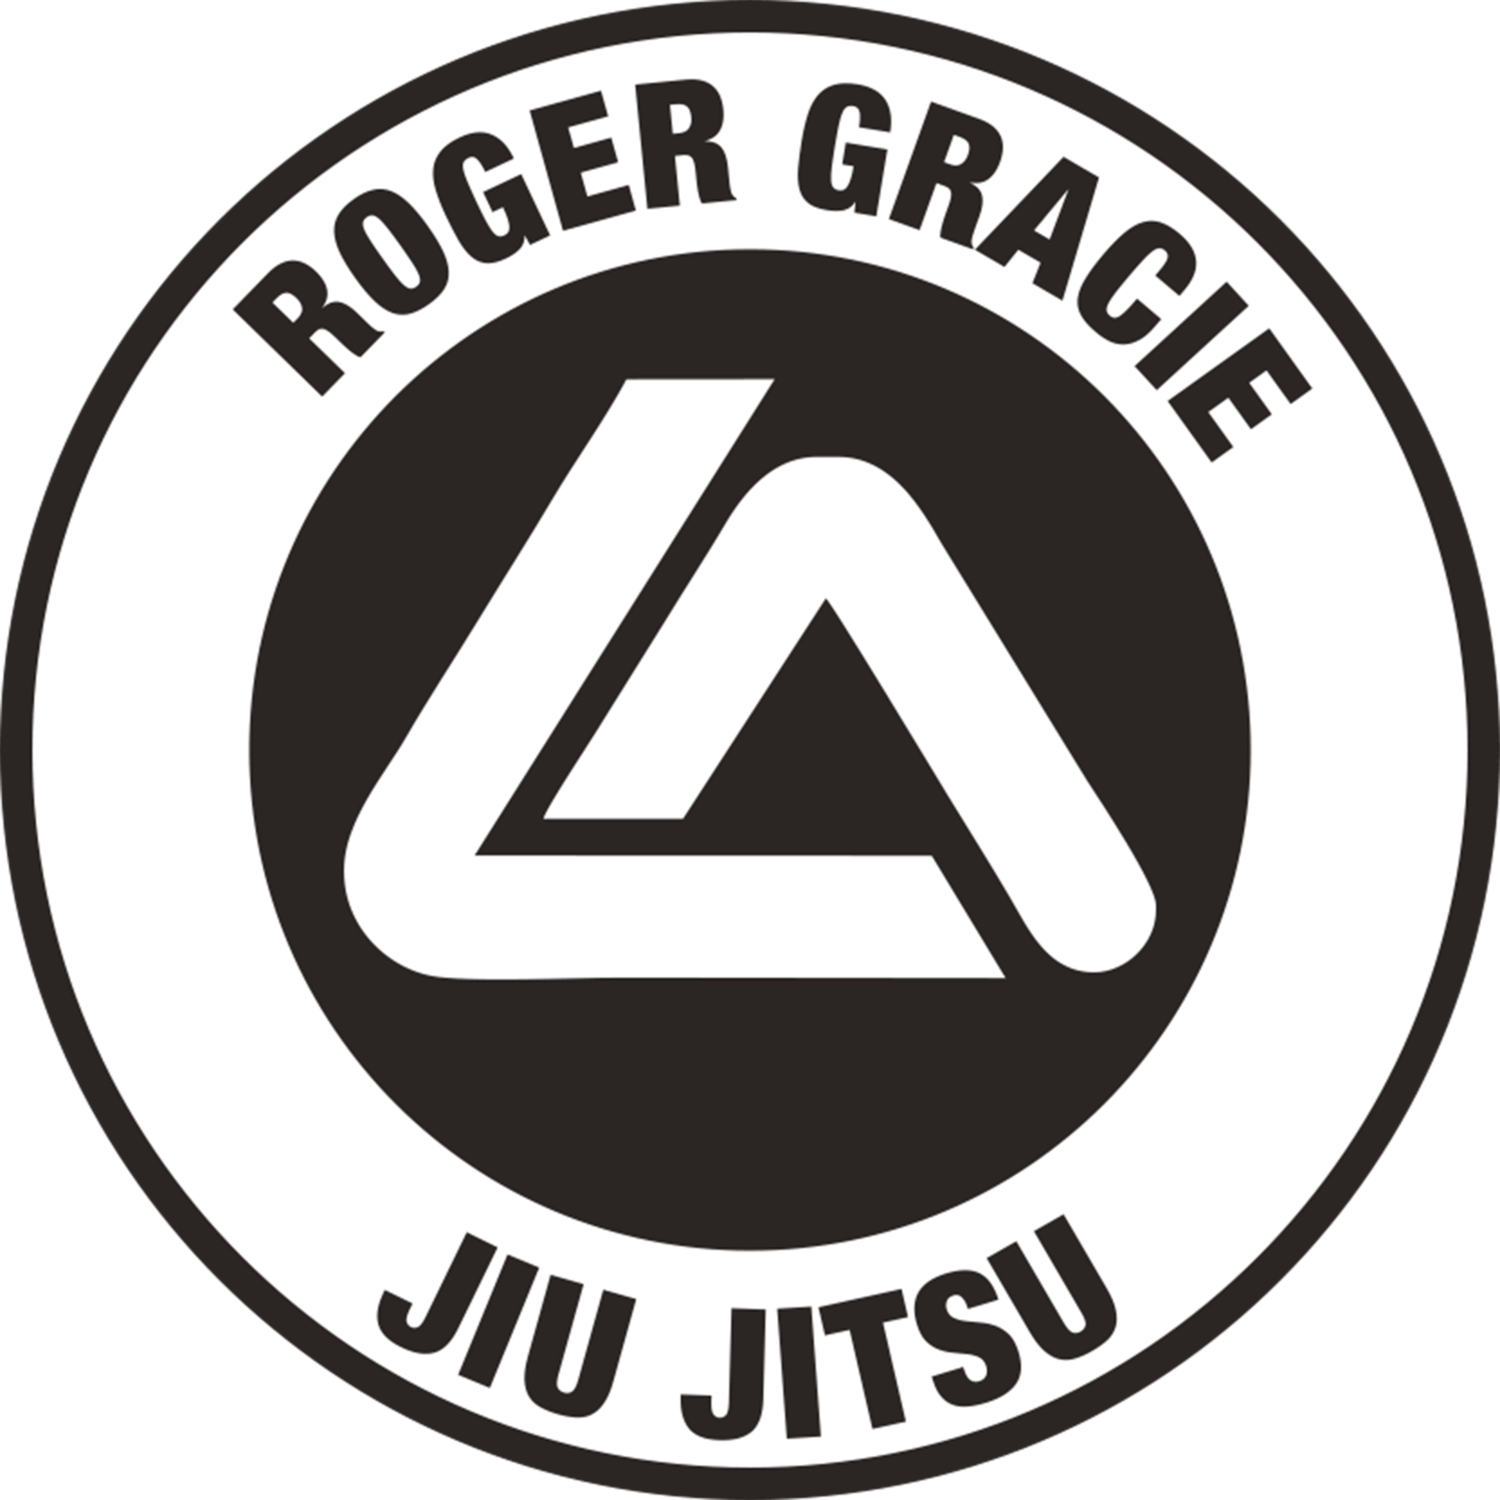 Roger Gracie Jiu Jitsu logo